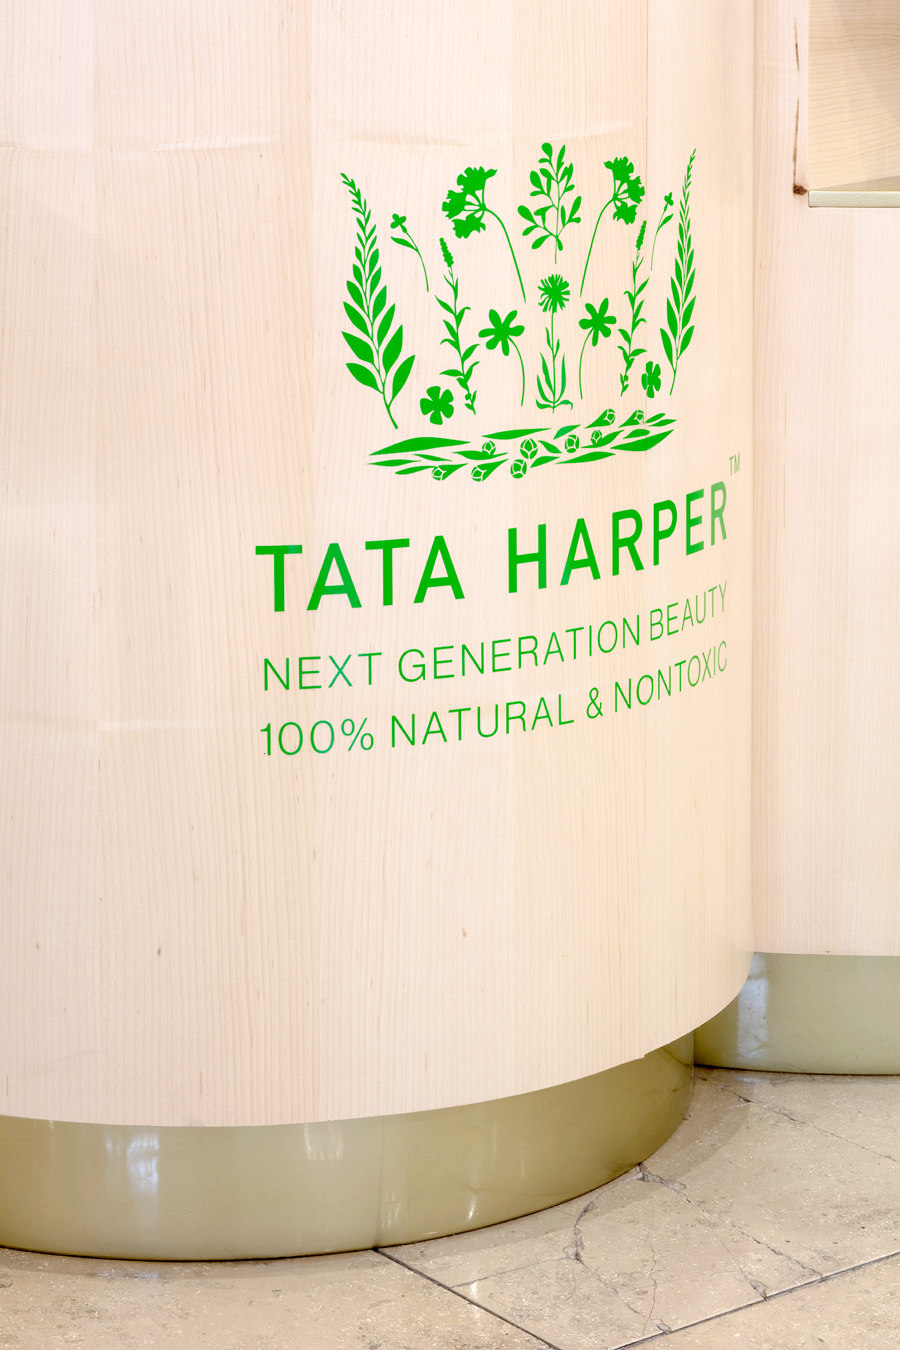 Tata Harper de FormRoom | Diseño de tiendas